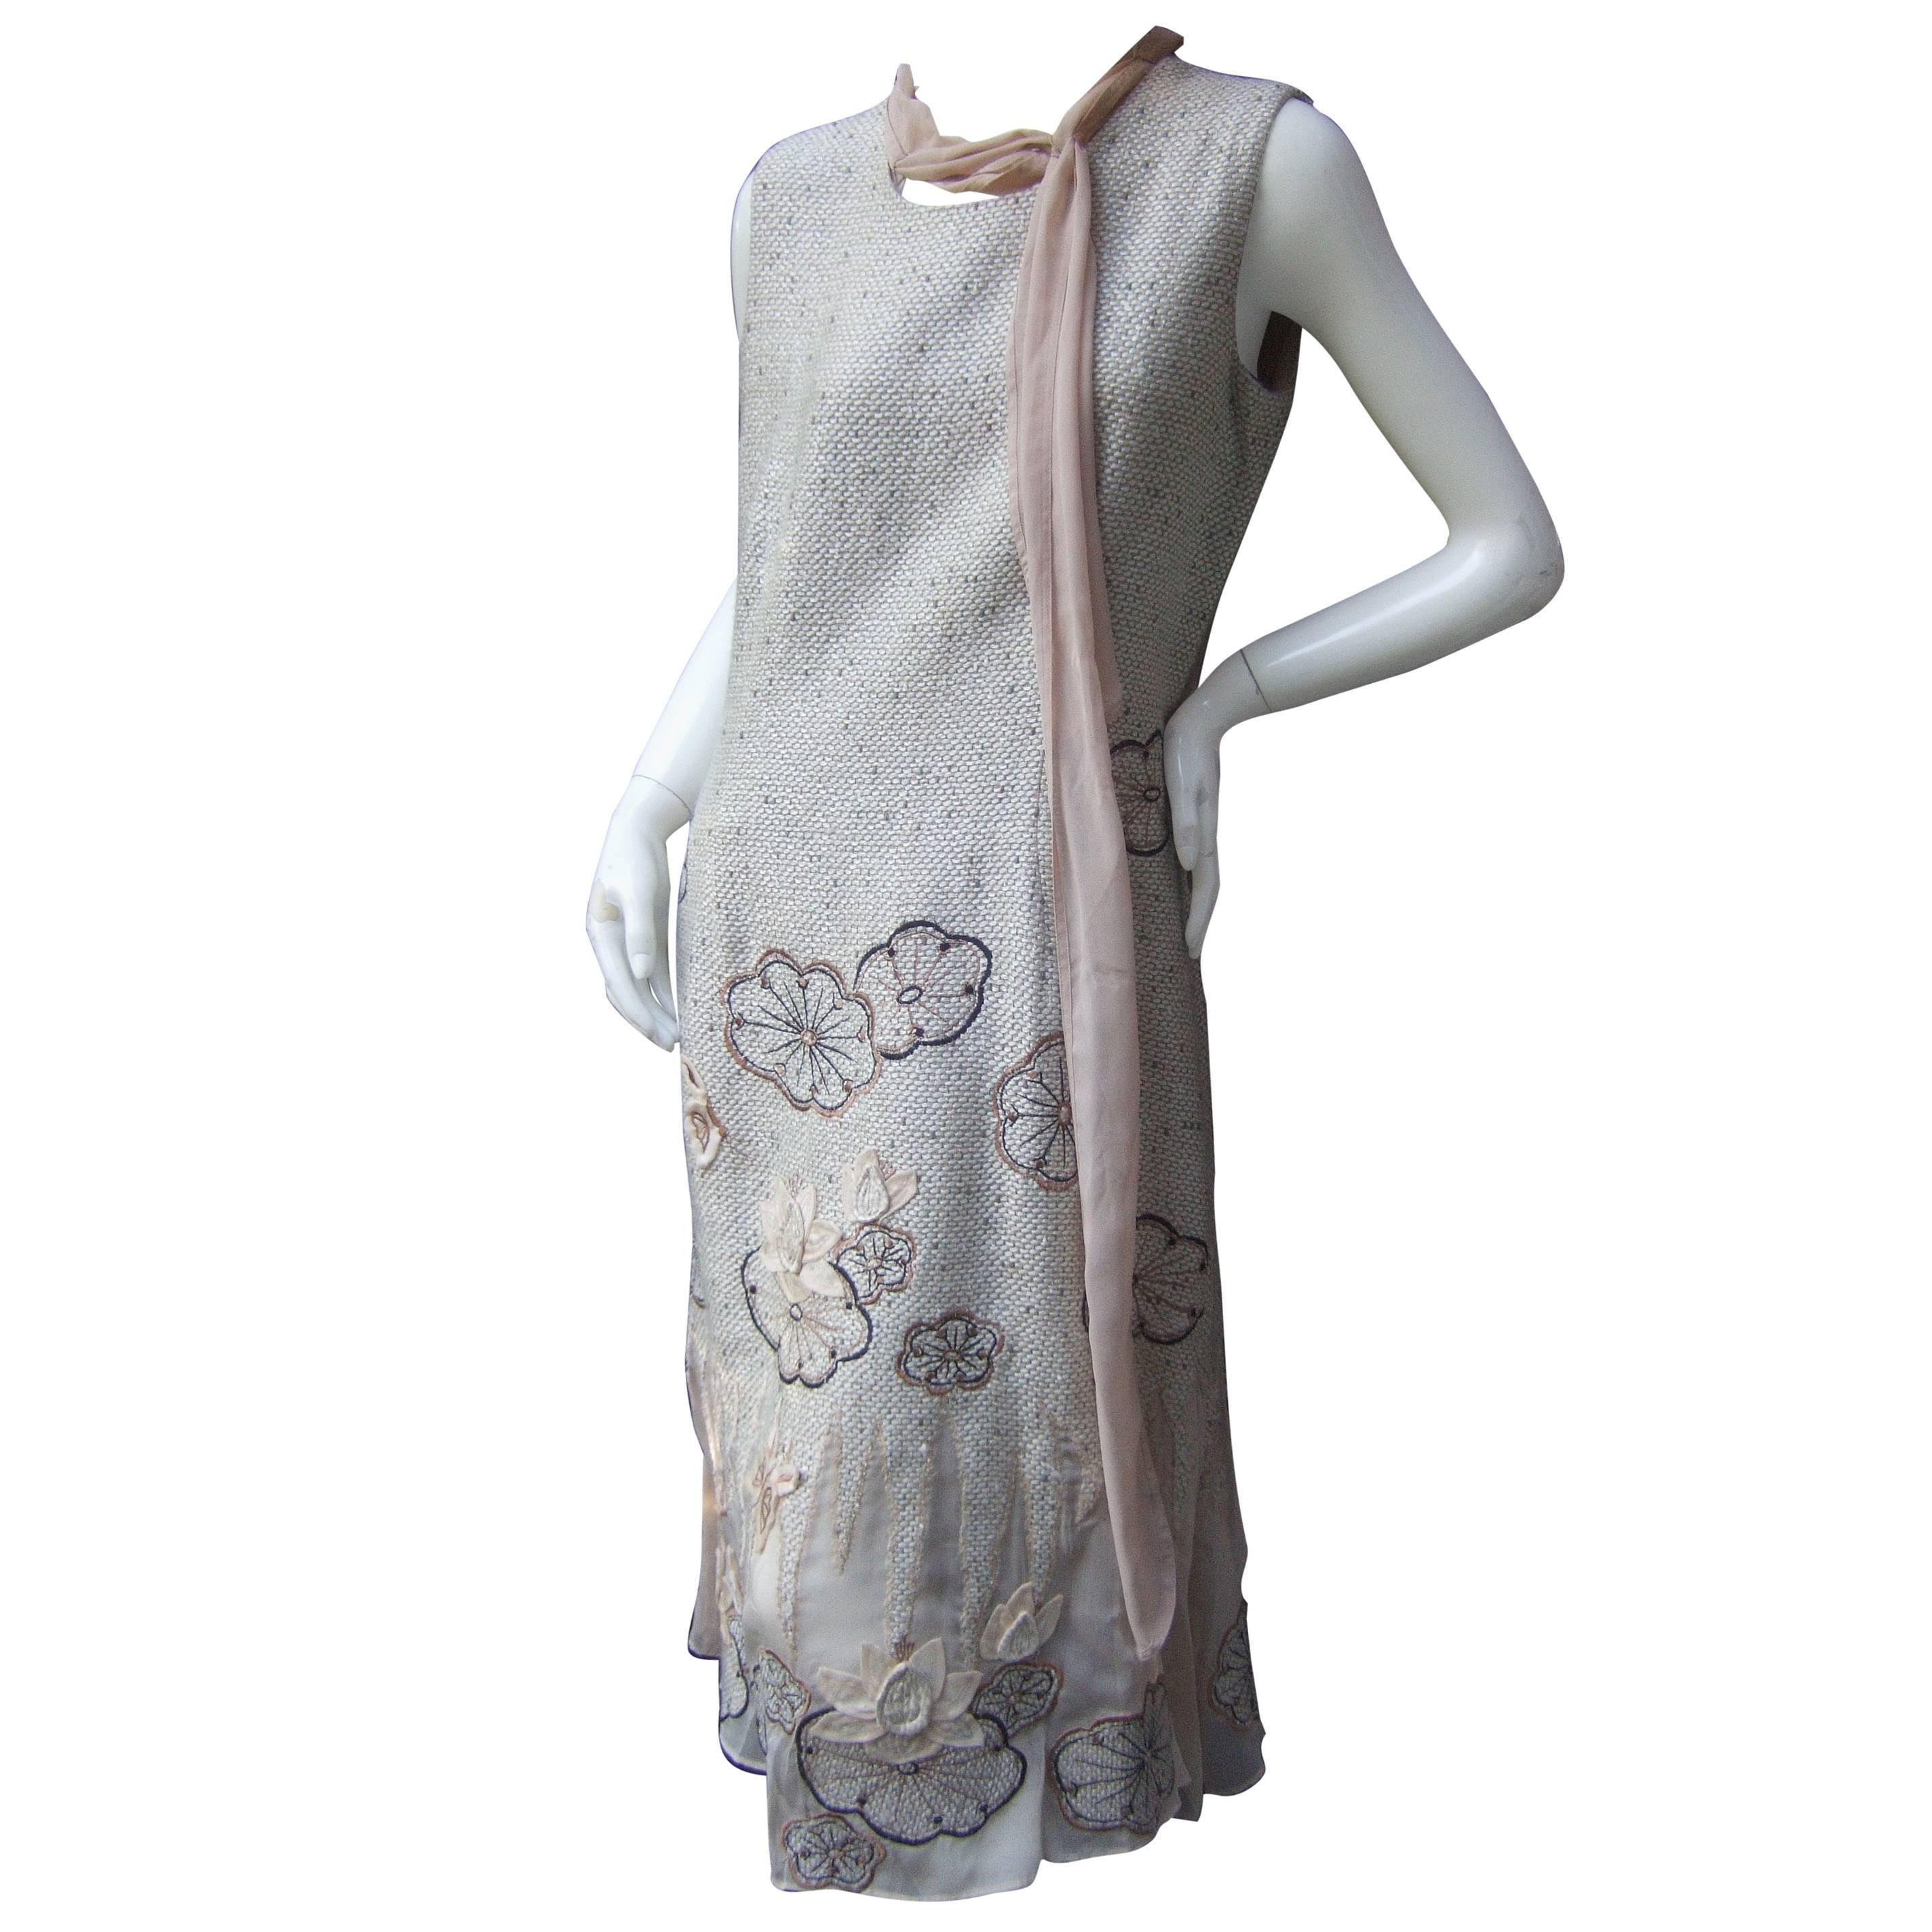 Stylish Woven Applique Illusion Design Sheath Dress US Size 12 For Sale